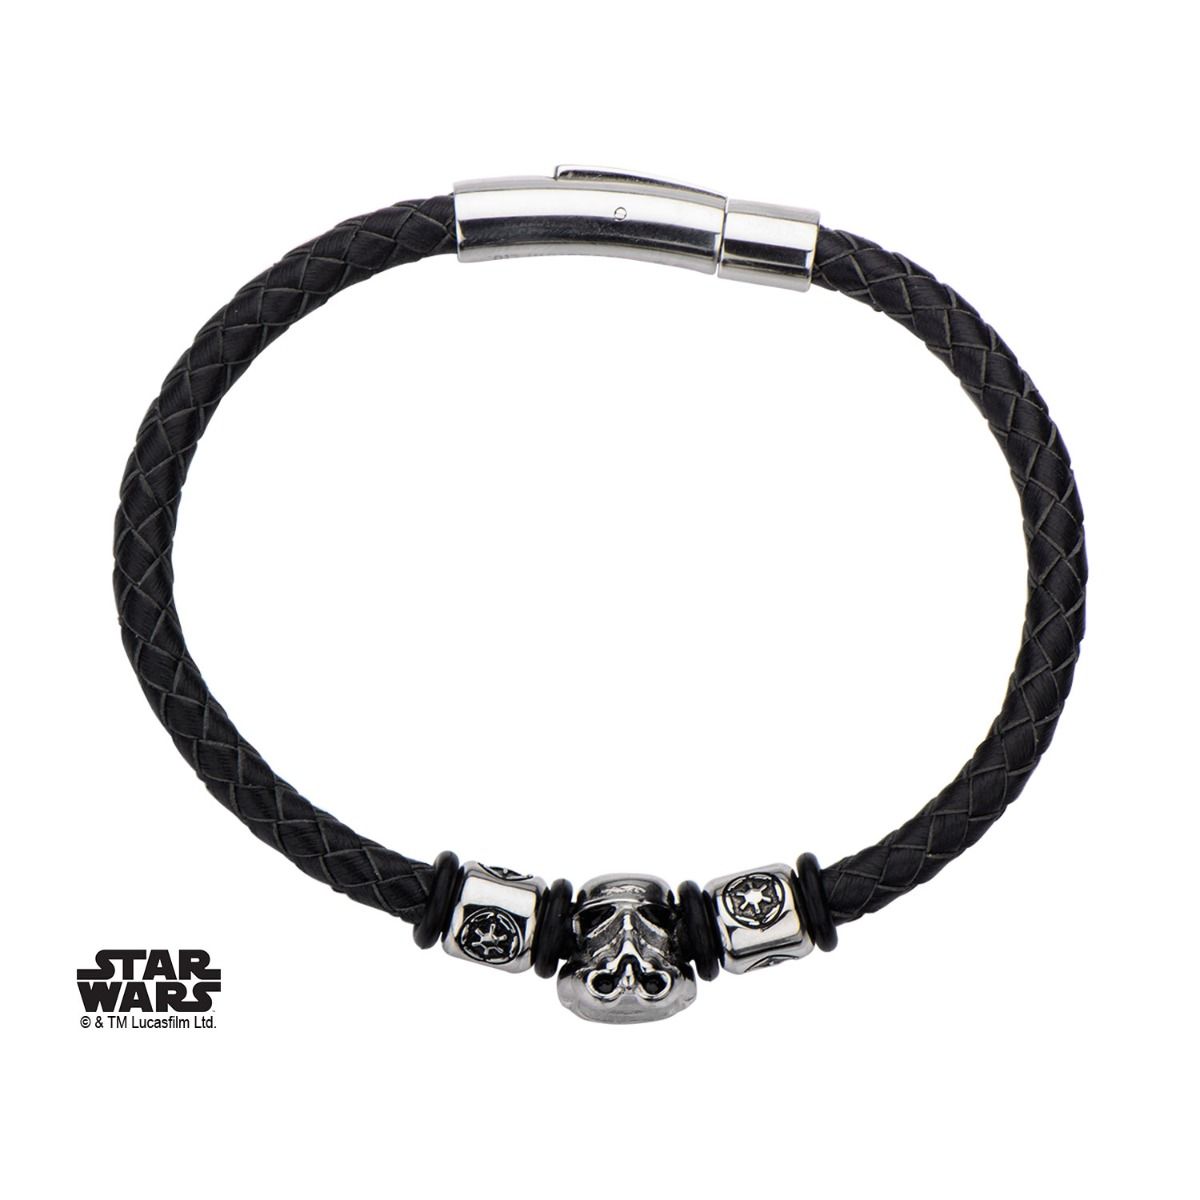 STAR WARS Star Wars Stormtrooper Galactic Empire Symbol Bead Charm Leather Bracelet -Rebel Bod-RebelBod